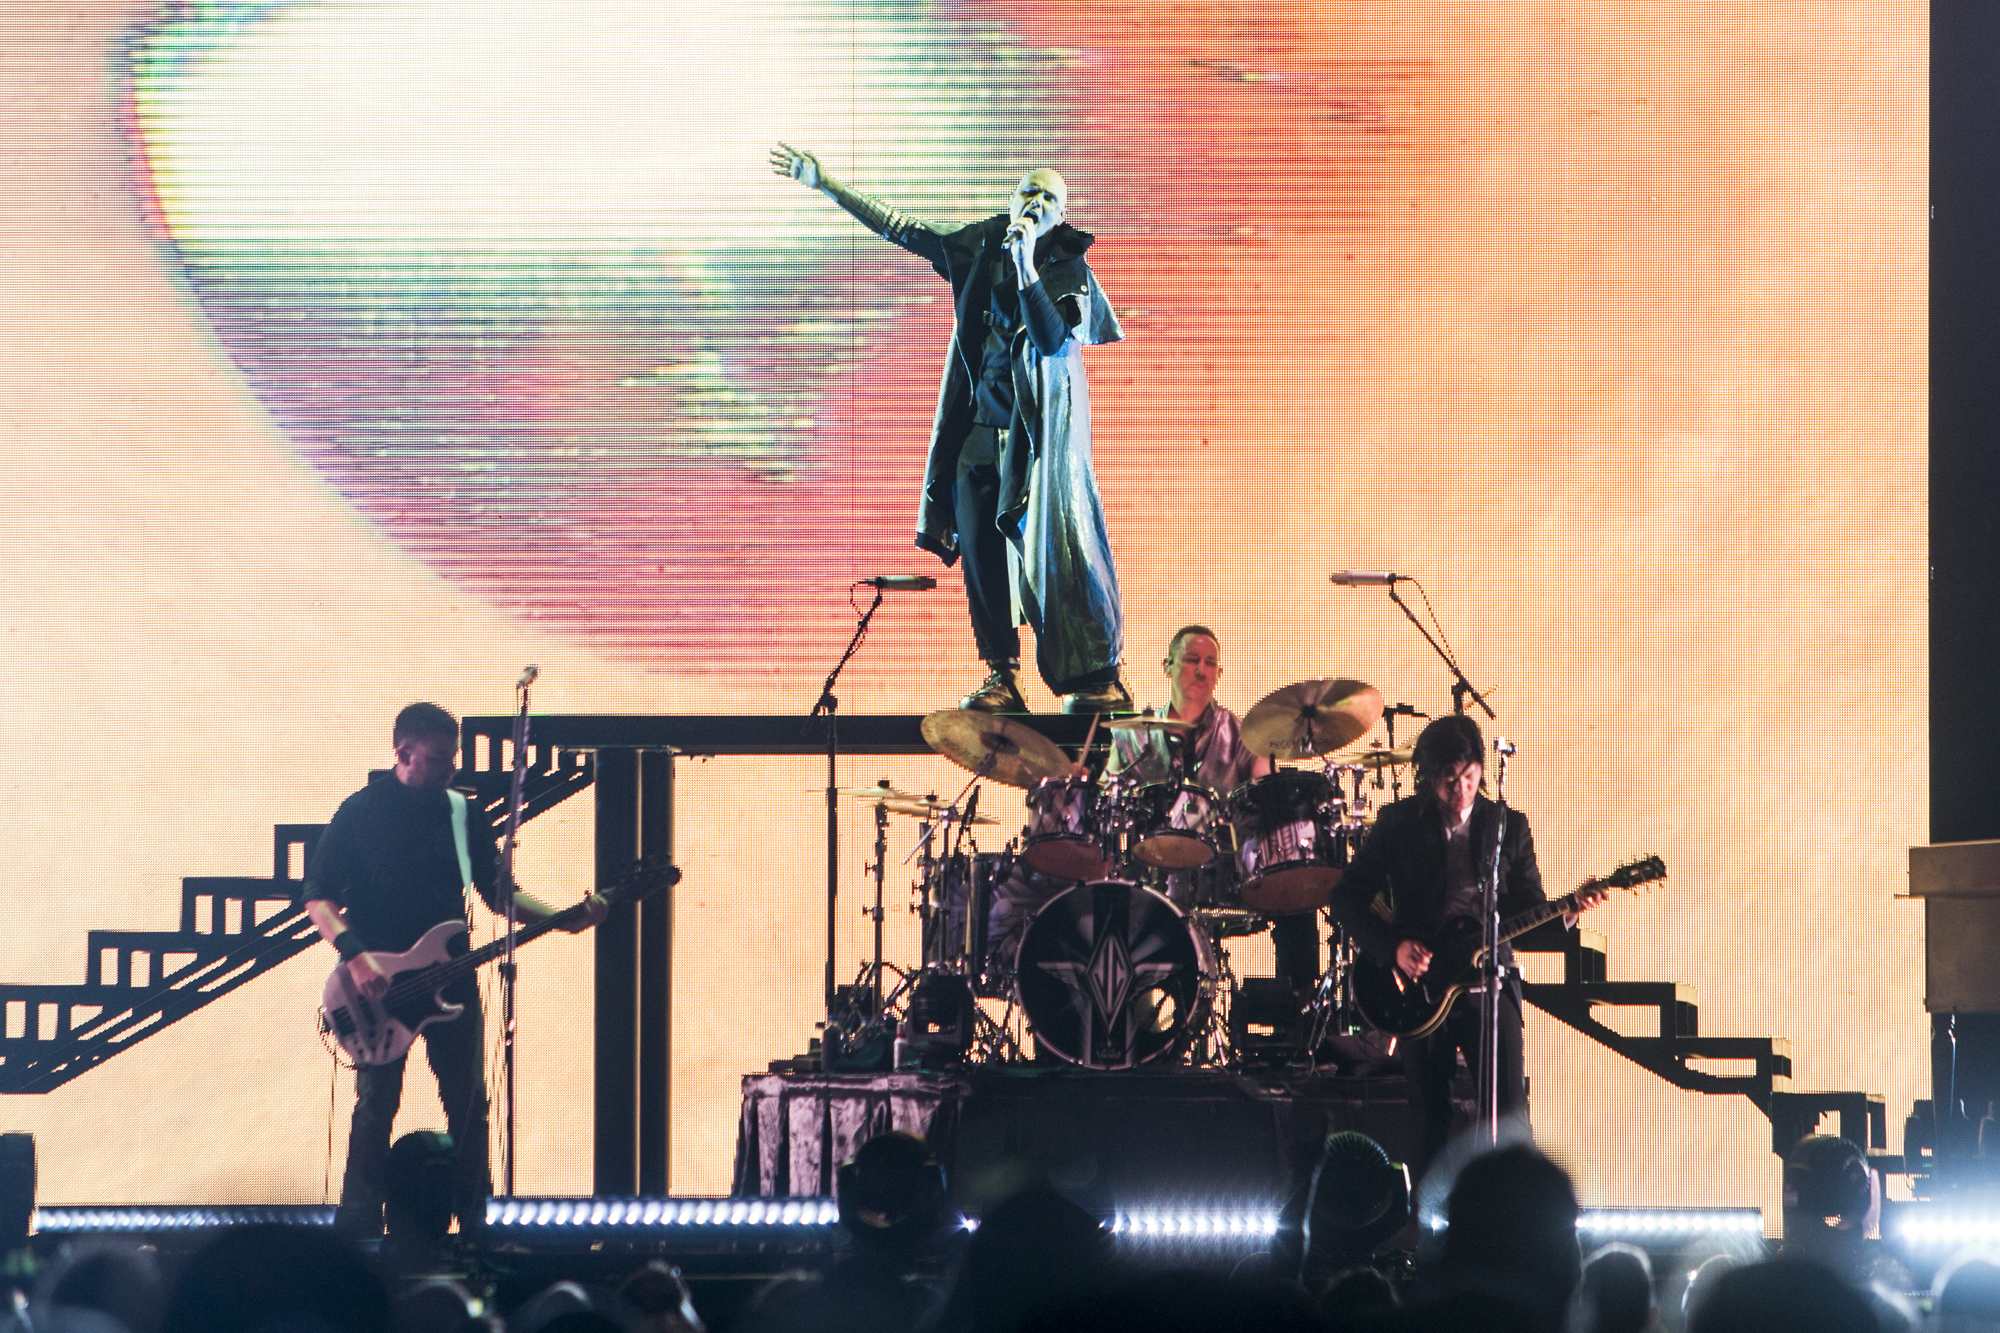 Concert review: The Smashing Pumpkins triumph in Ottawa